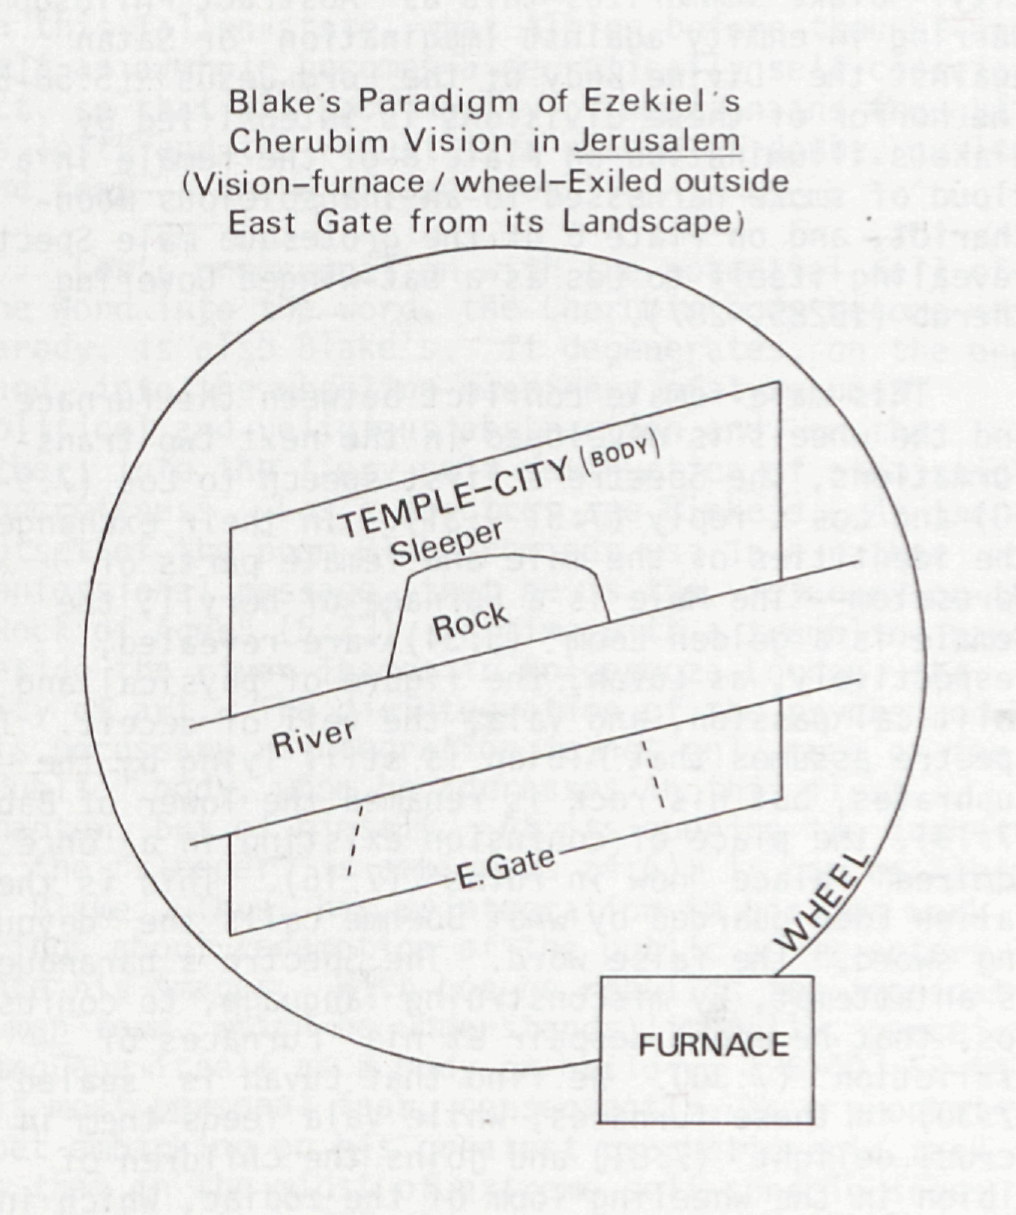 Blake’s Paradigm of Ezekiel’s
			Cherubim Vision in Jerusalem 
			(Vision—furnace/wheel—Exiled outside
			East Gate from its Landscape)
			
			TEMPLE-CITY (BODY)
			Sleeper
			
			Rock
			
			River
			
			E. Gate
			
			WHEEL
			
			FURNACE